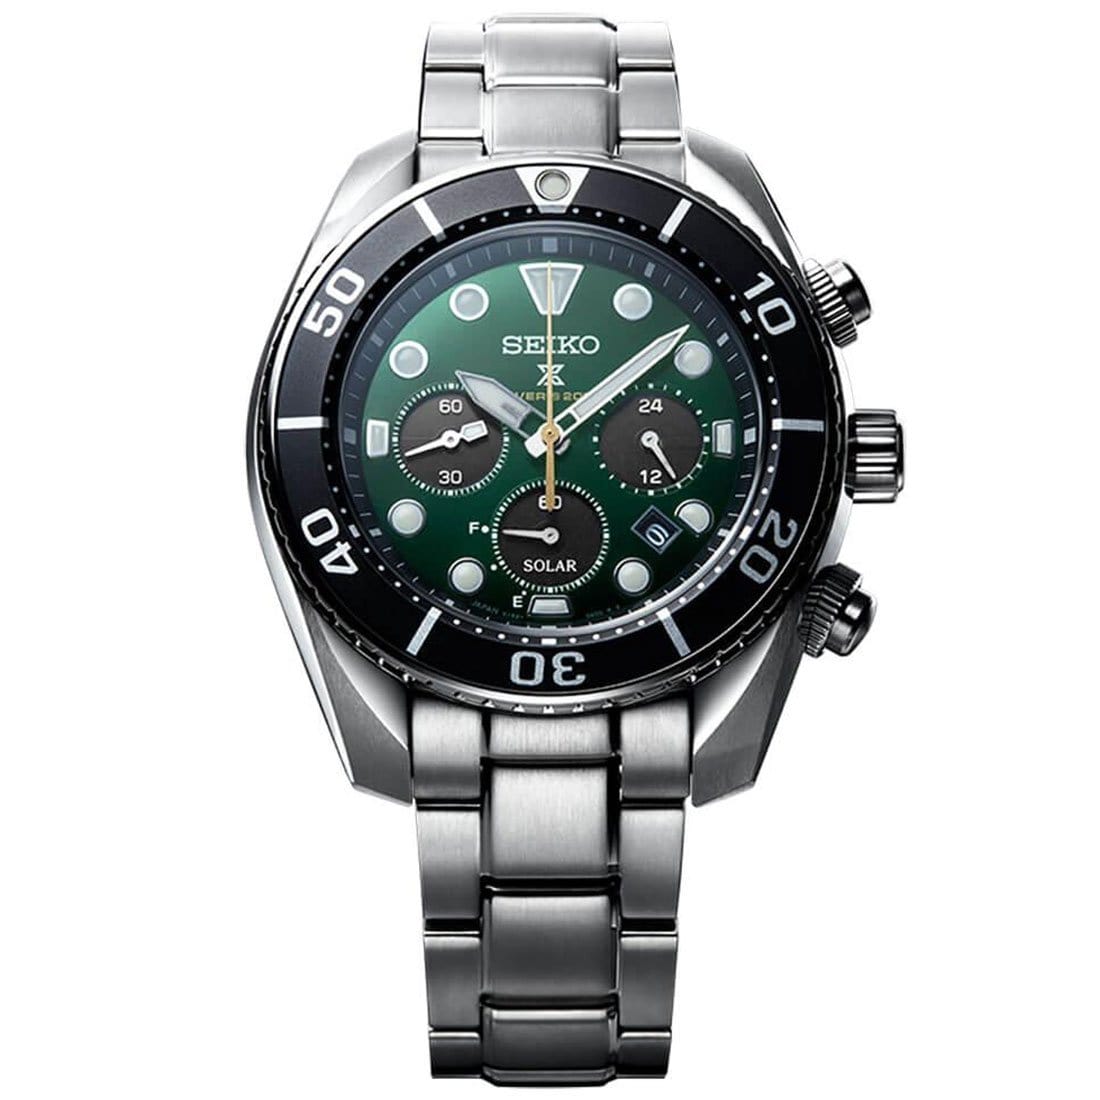 Seiko SBDL083 Prospex Marinemaster 140th Anniversary Limited Edition JDM Watch